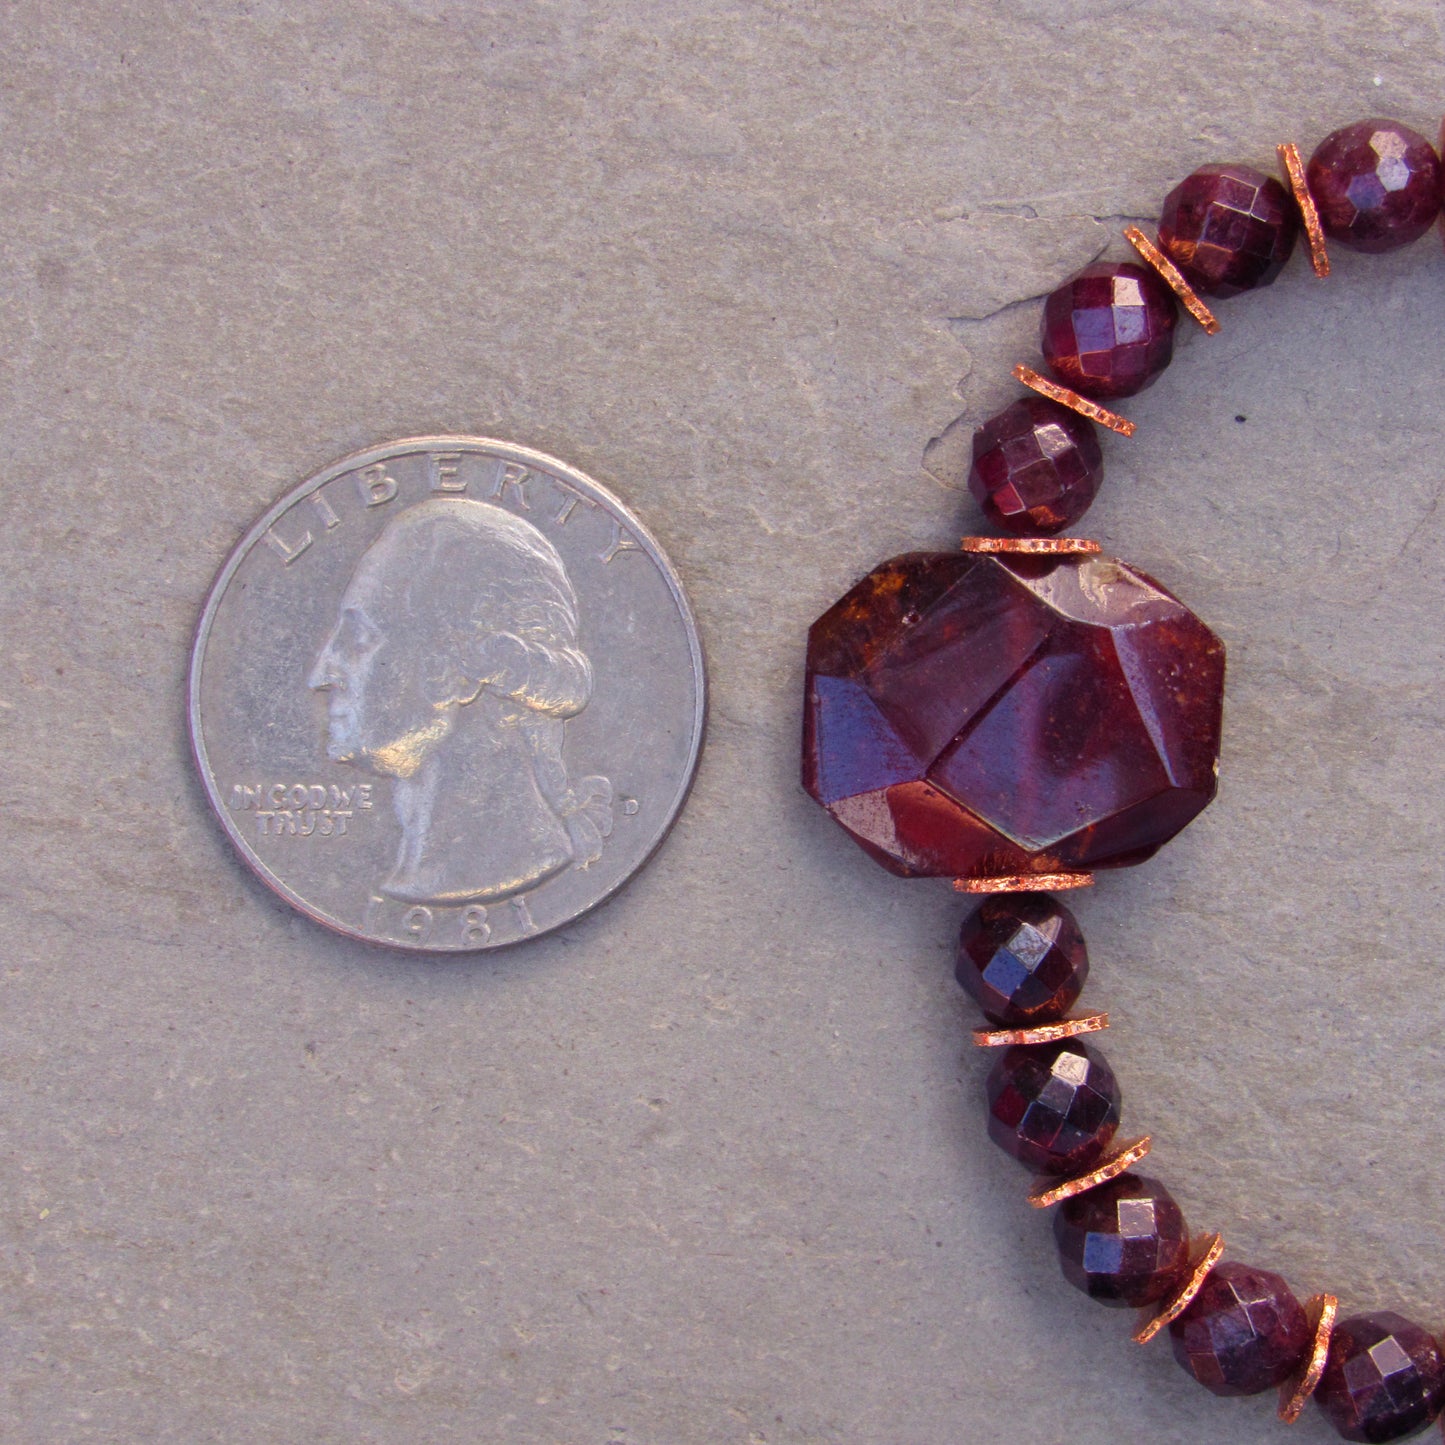 Women's Garnet gemstone and Copper Bracelet